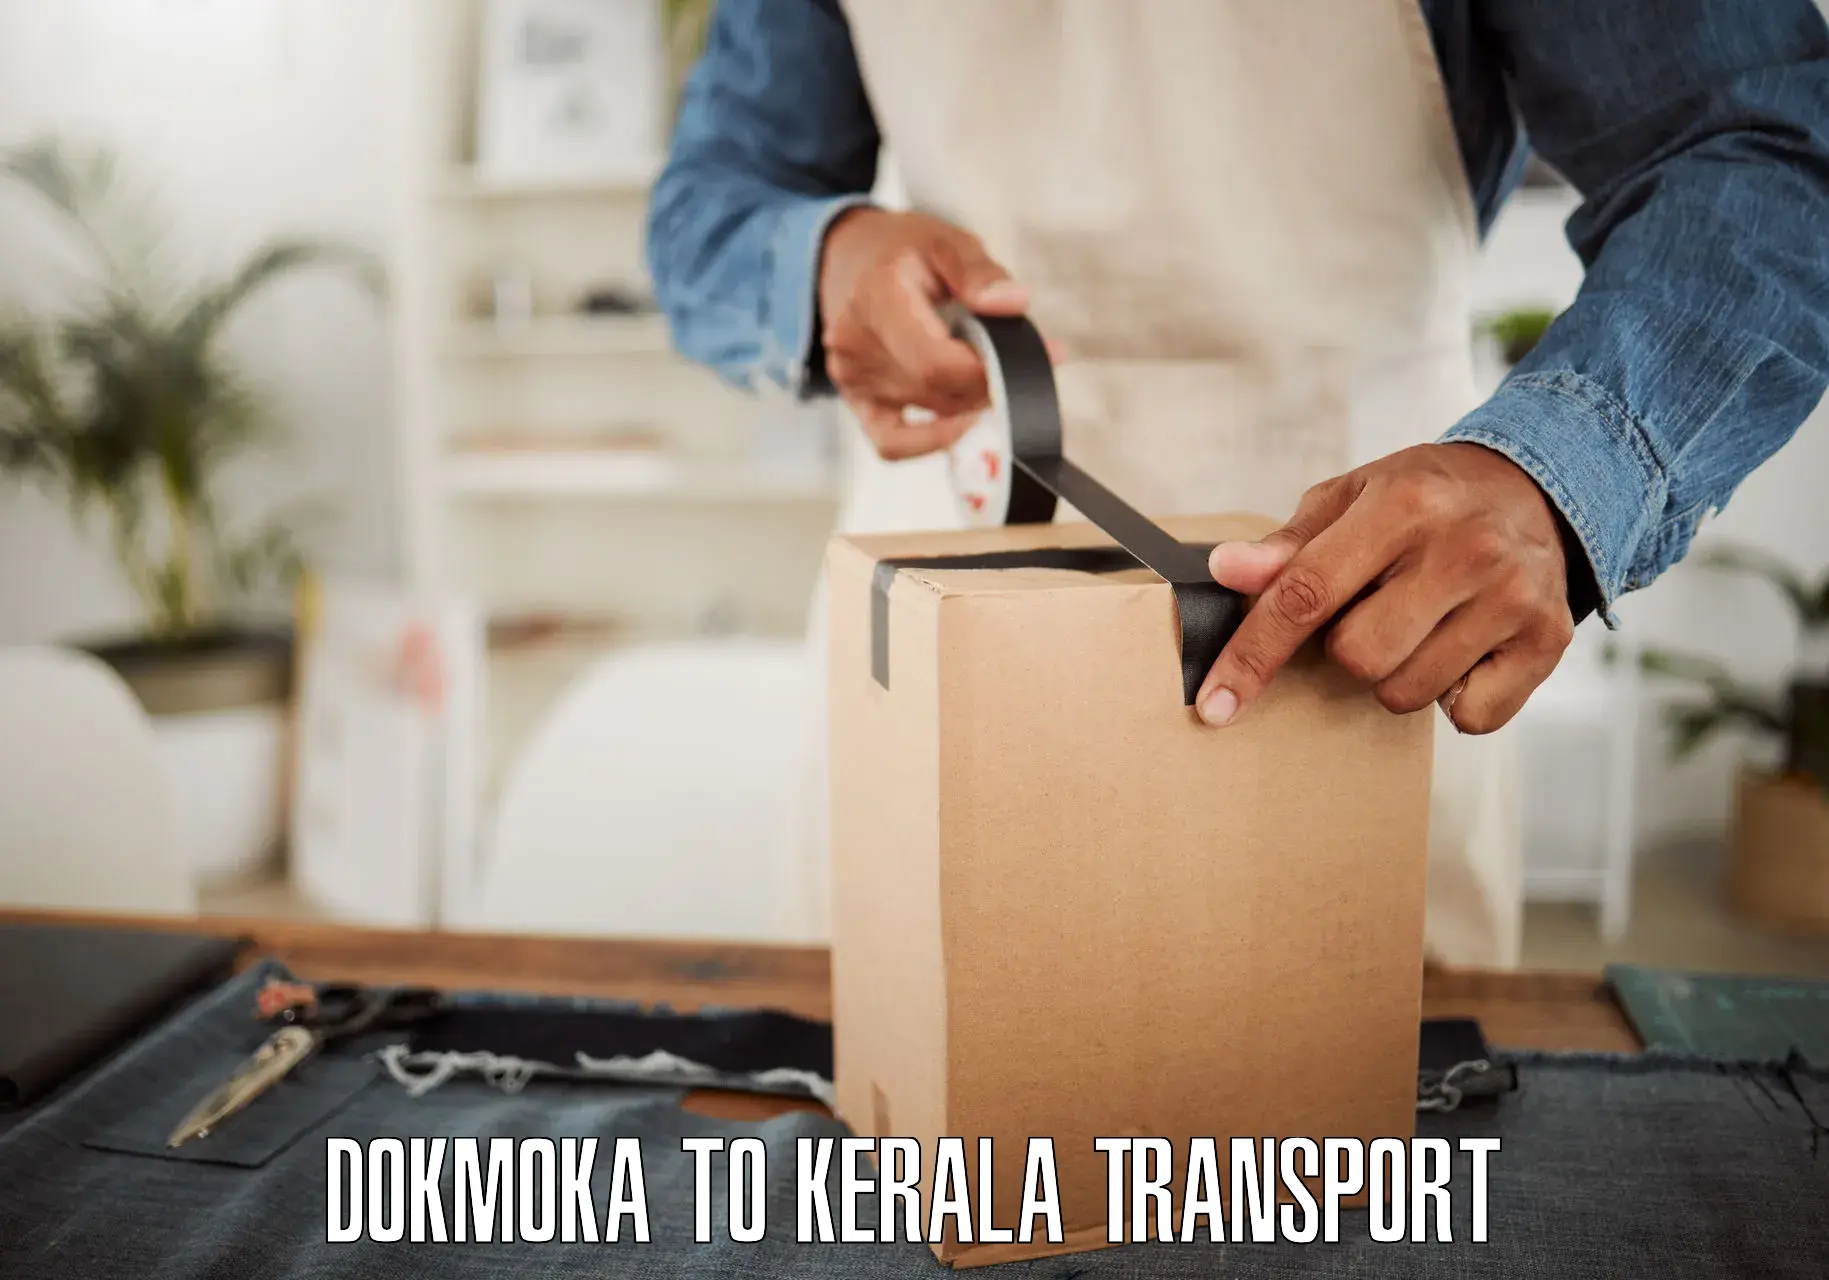 Transport in sharing in Dokmoka to Kodungallur